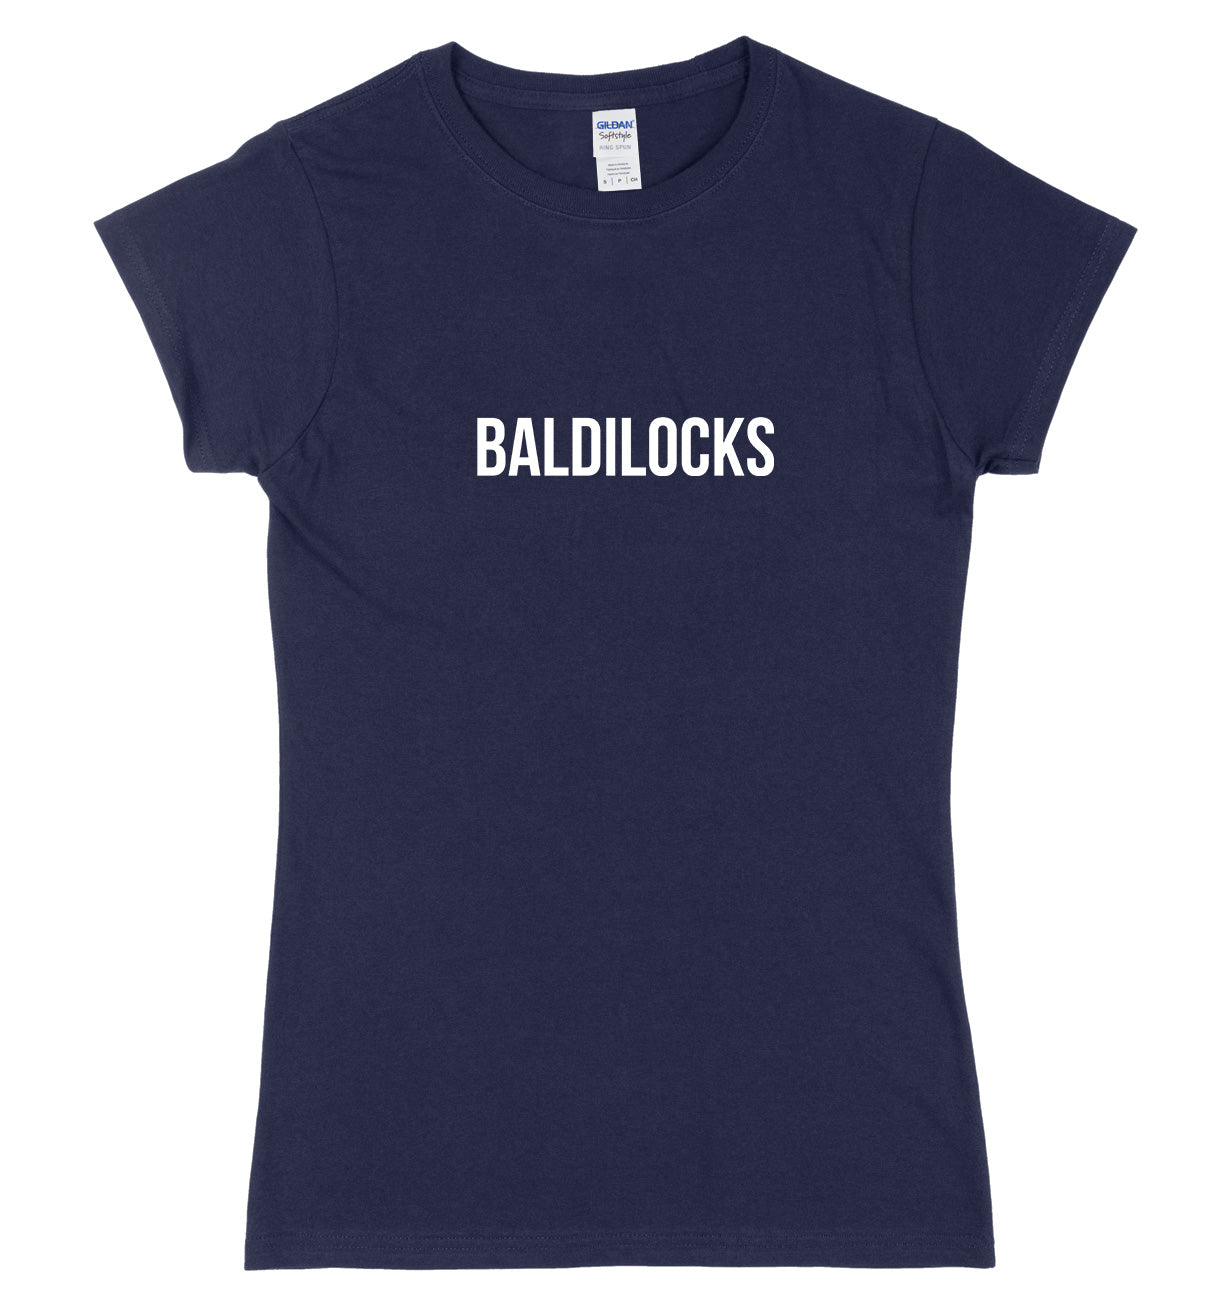 Baldilocks Womens Ladies Slim Fit T-Shirt